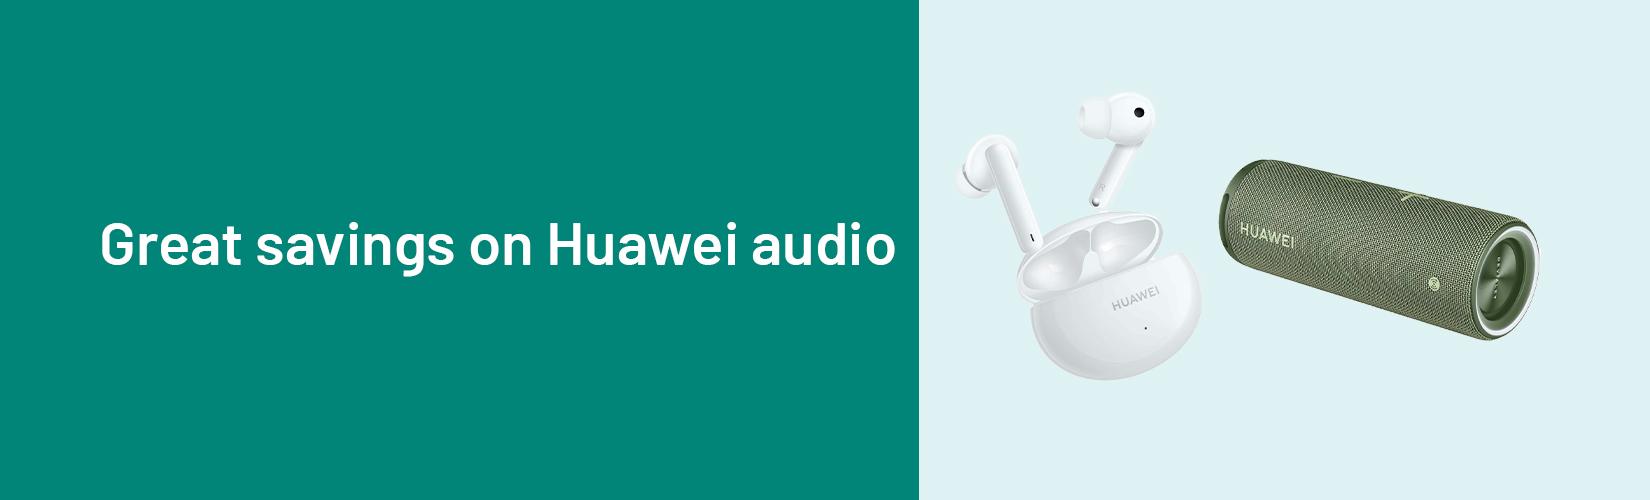 Great savings on Huawei audio.